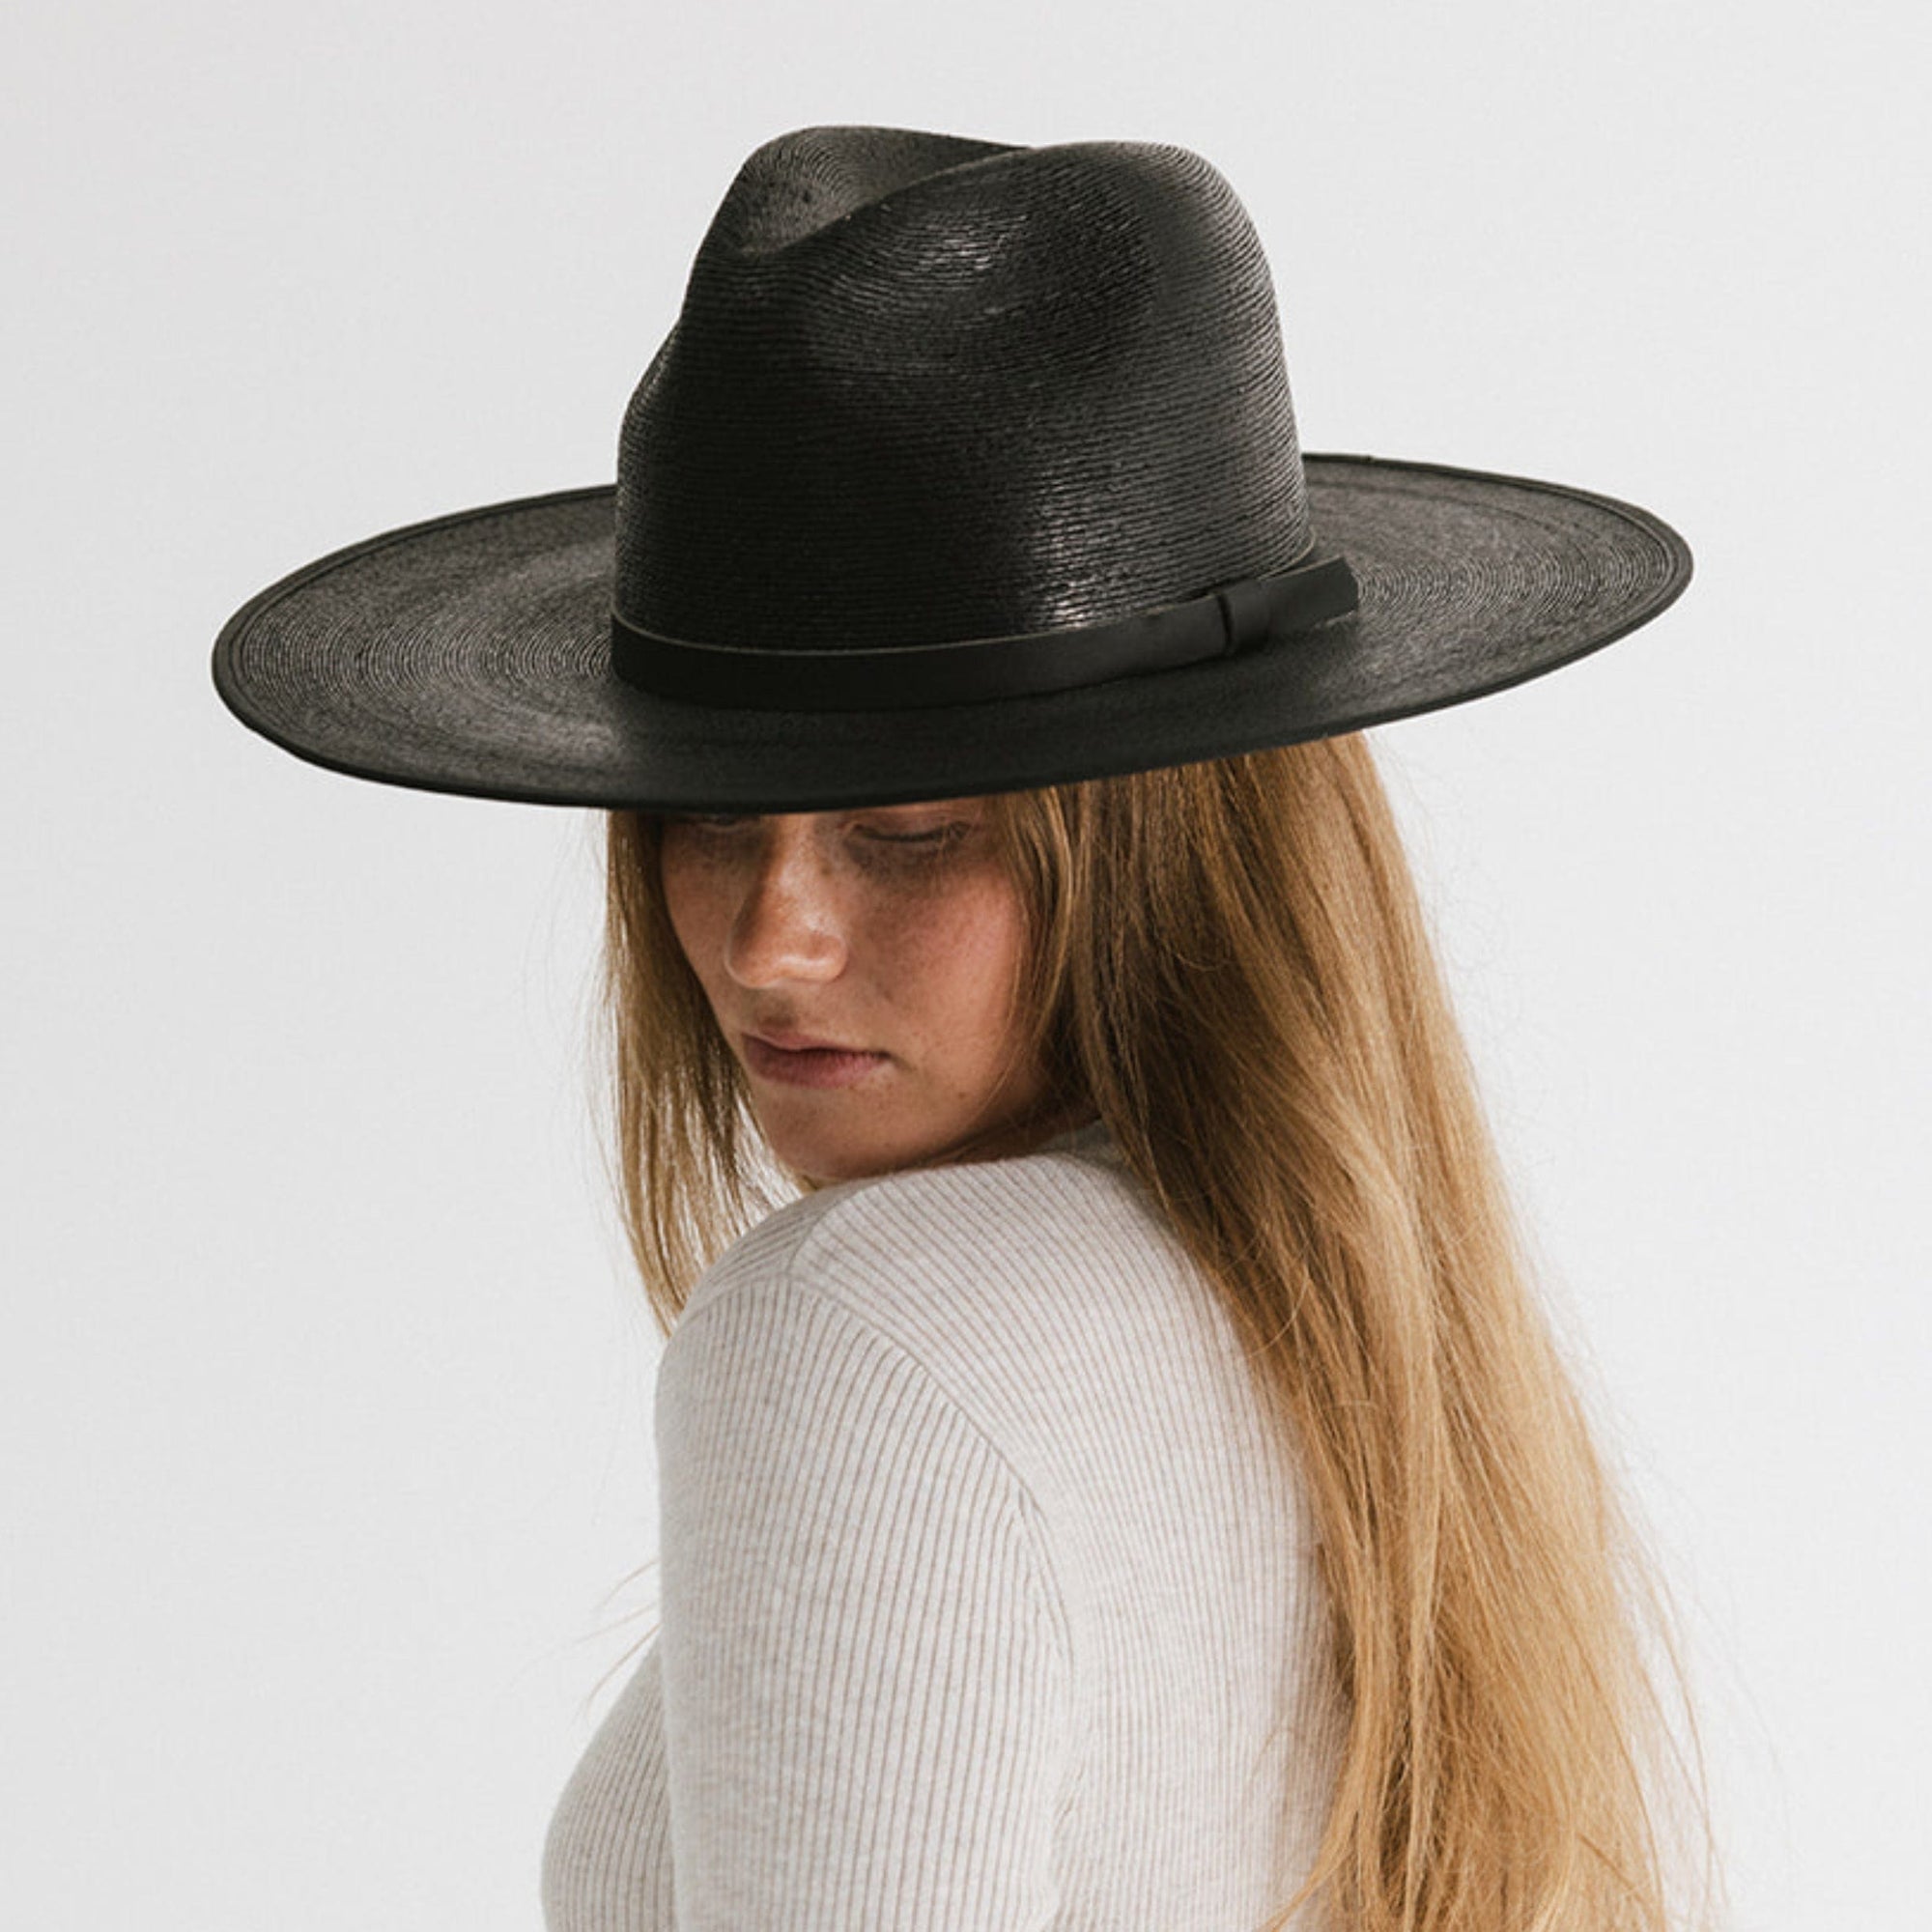 Women's Elegant Large Brim Boater Straw Sun Hat Summer Hats Flat Top S